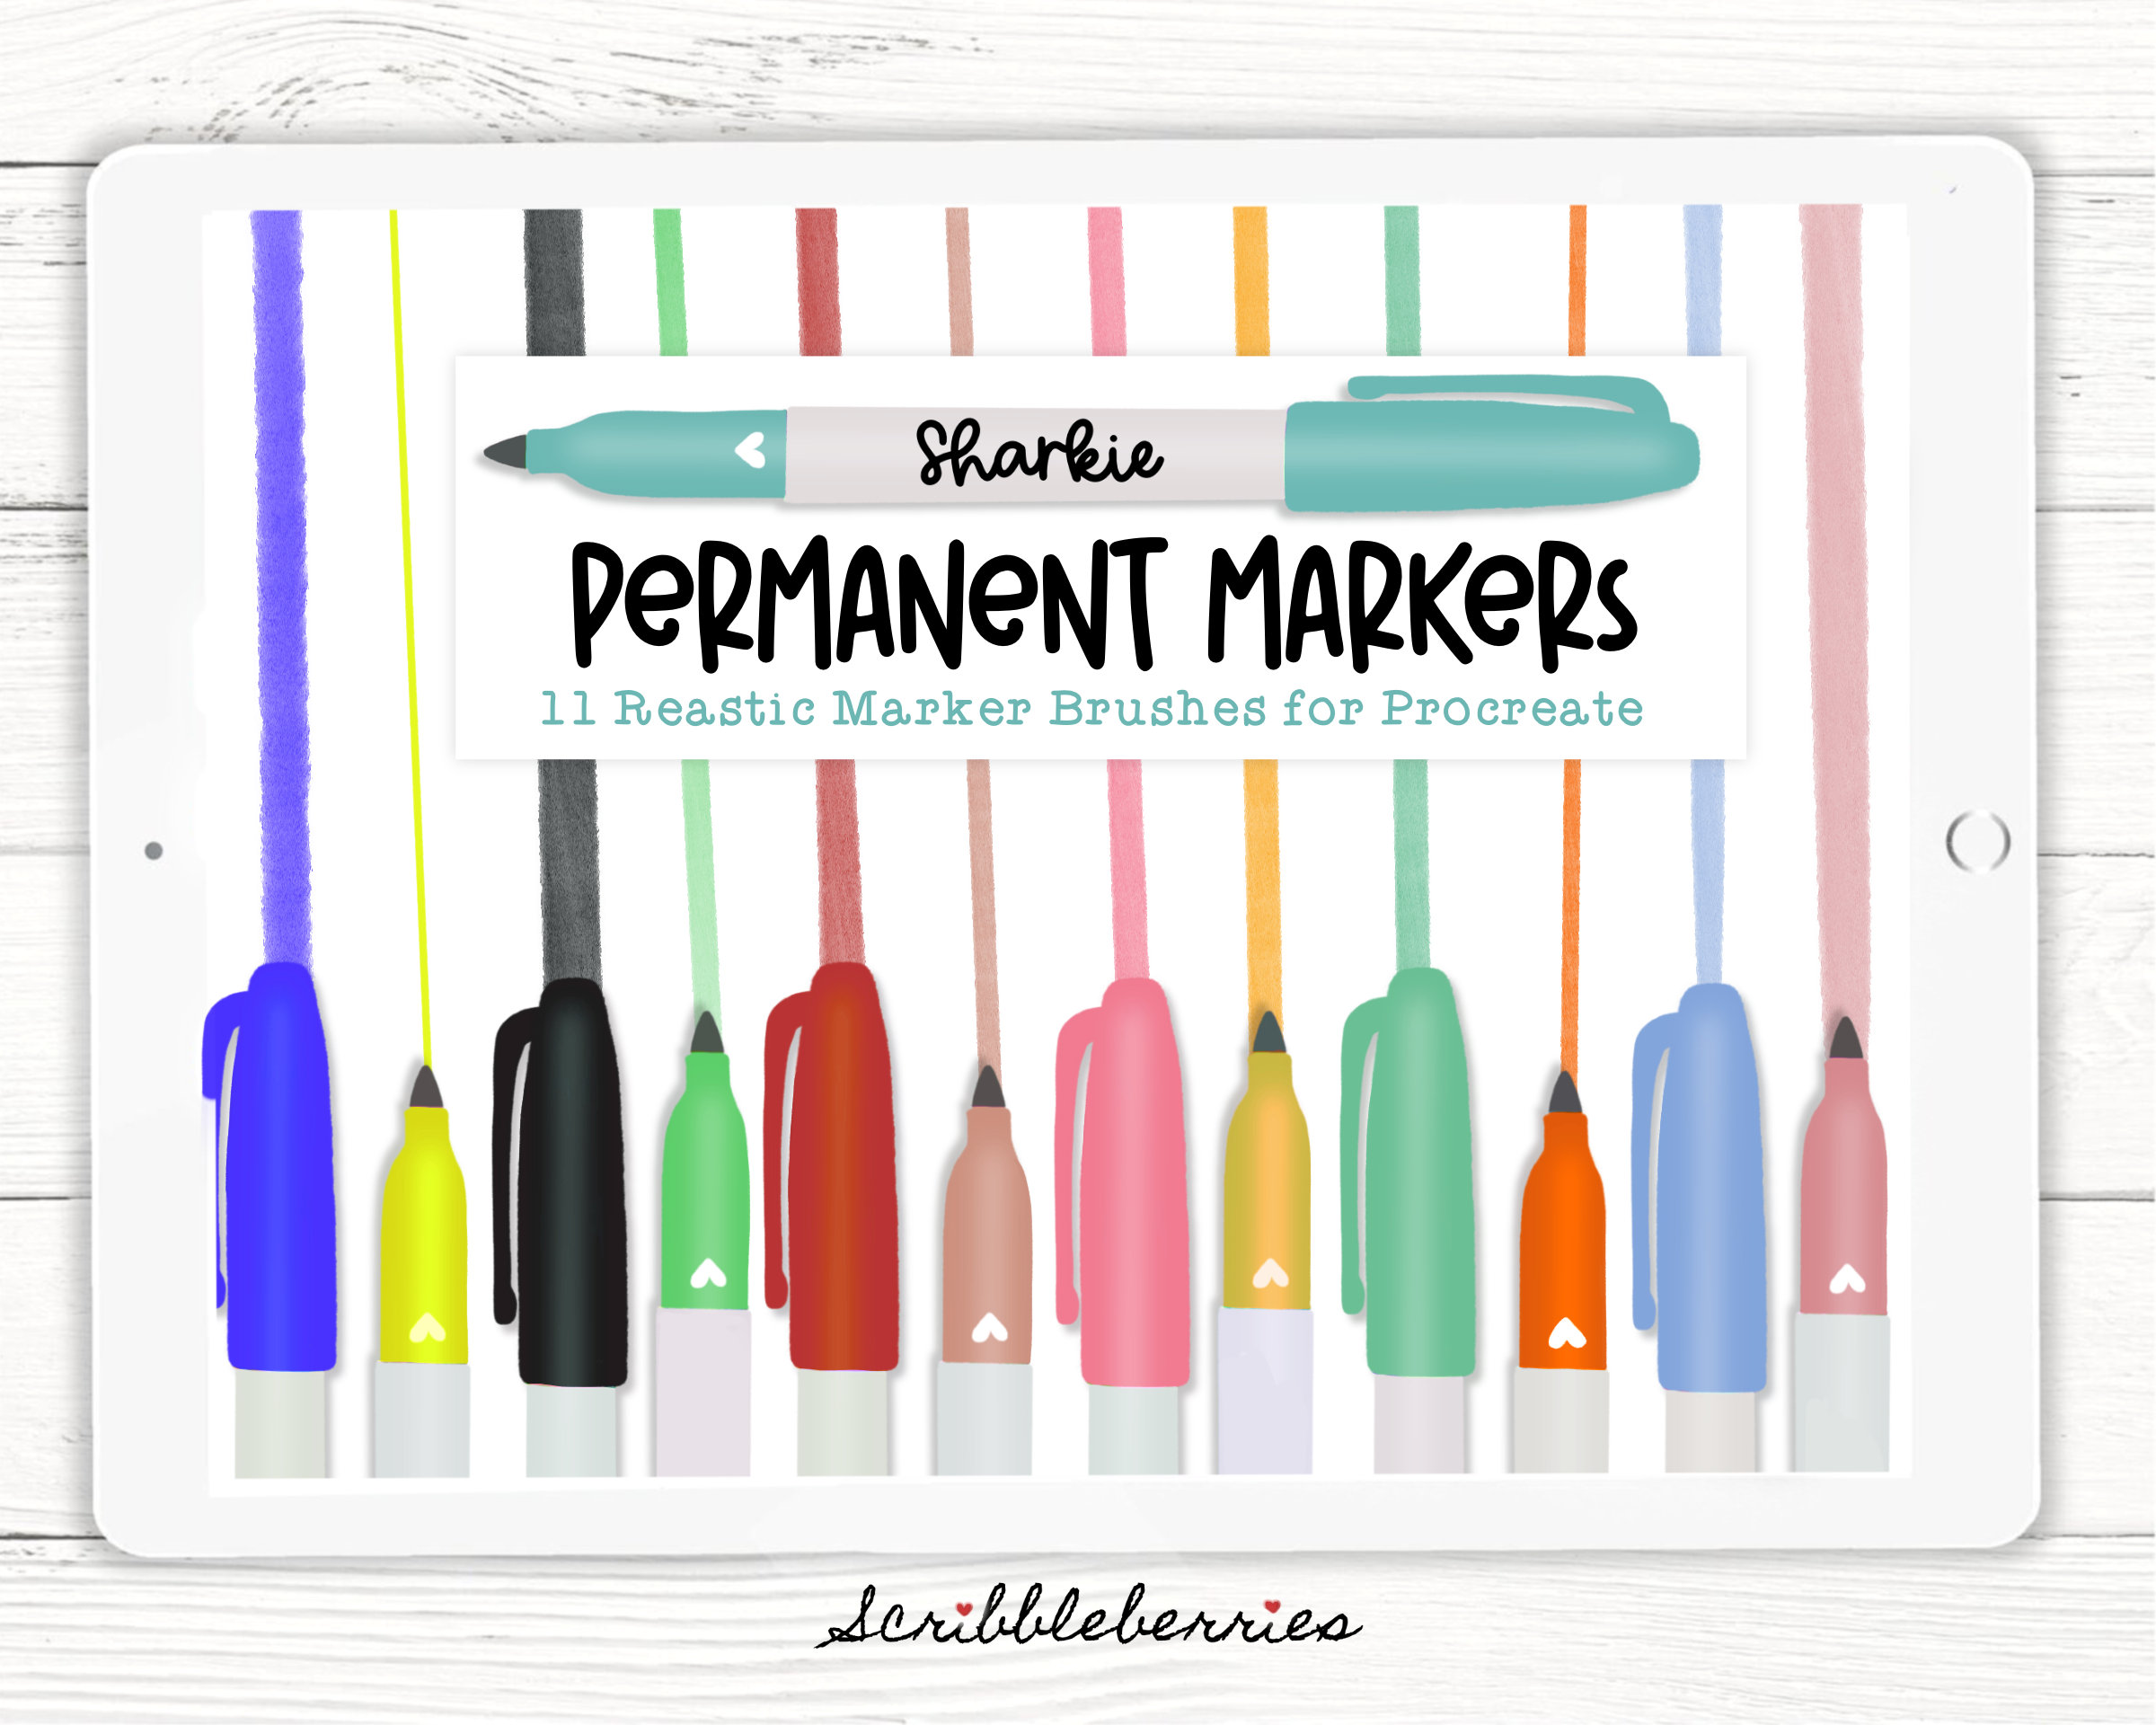 Primrosia 24 Skin Tones Dual Tip Watercolor Markers, Fine and Brush Tips  Pens 